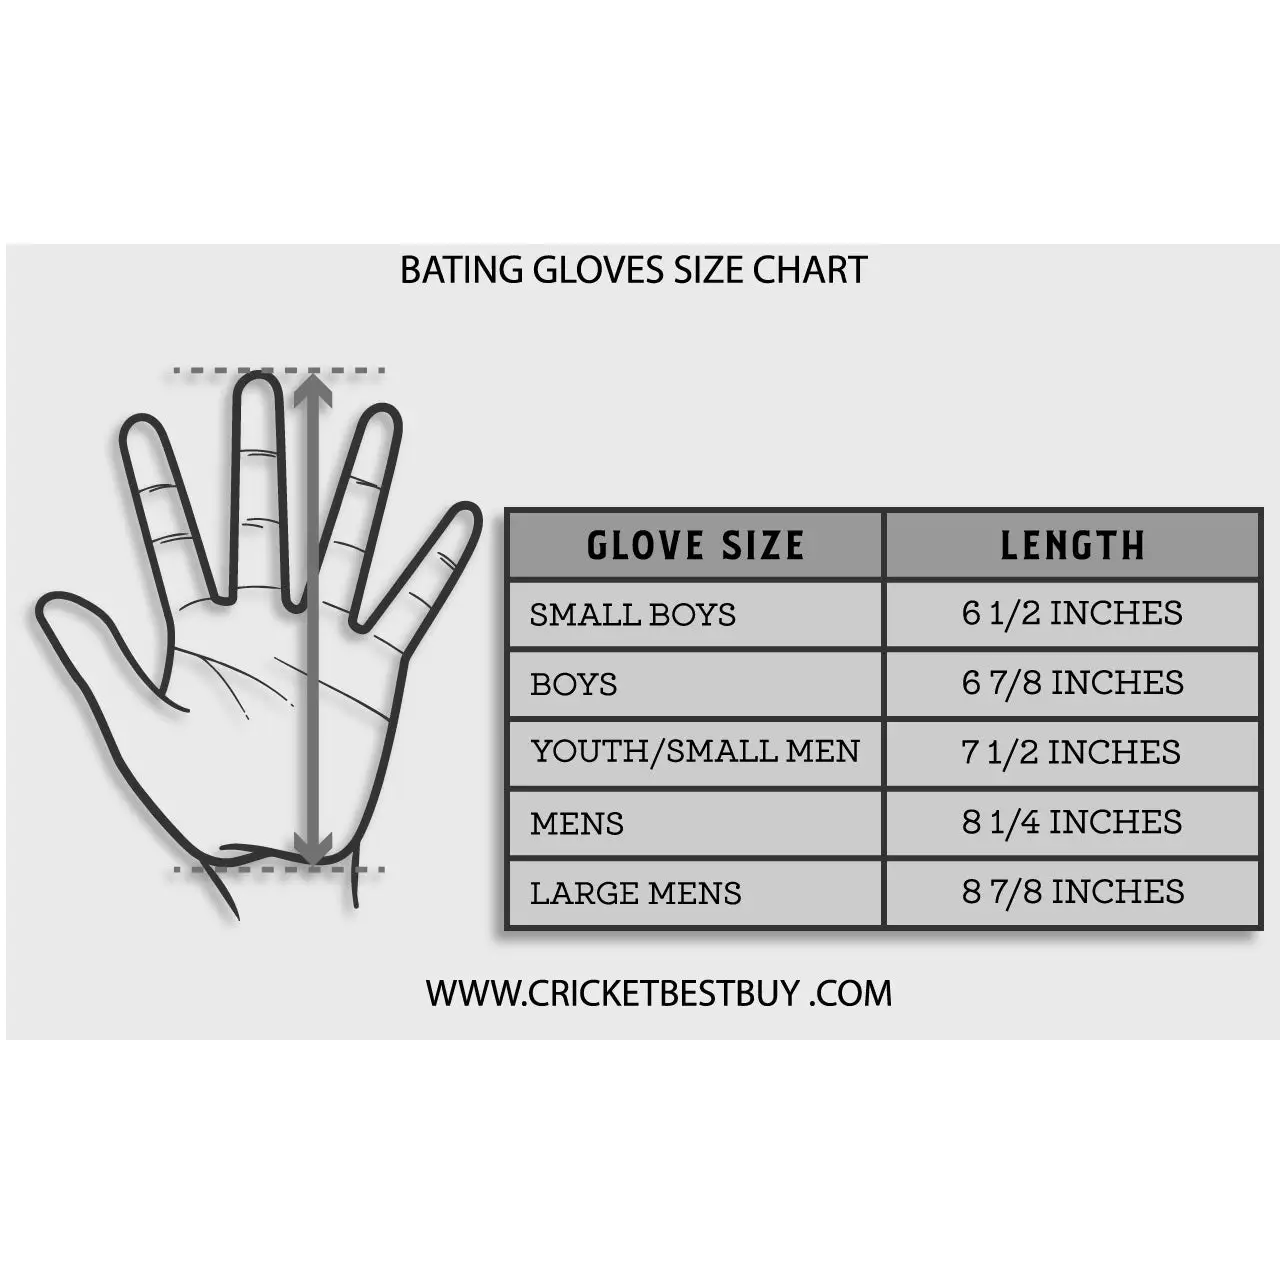 SG Rsd Prolite Cricket Batting Gloves - Men LH - GLOVE - BATTING